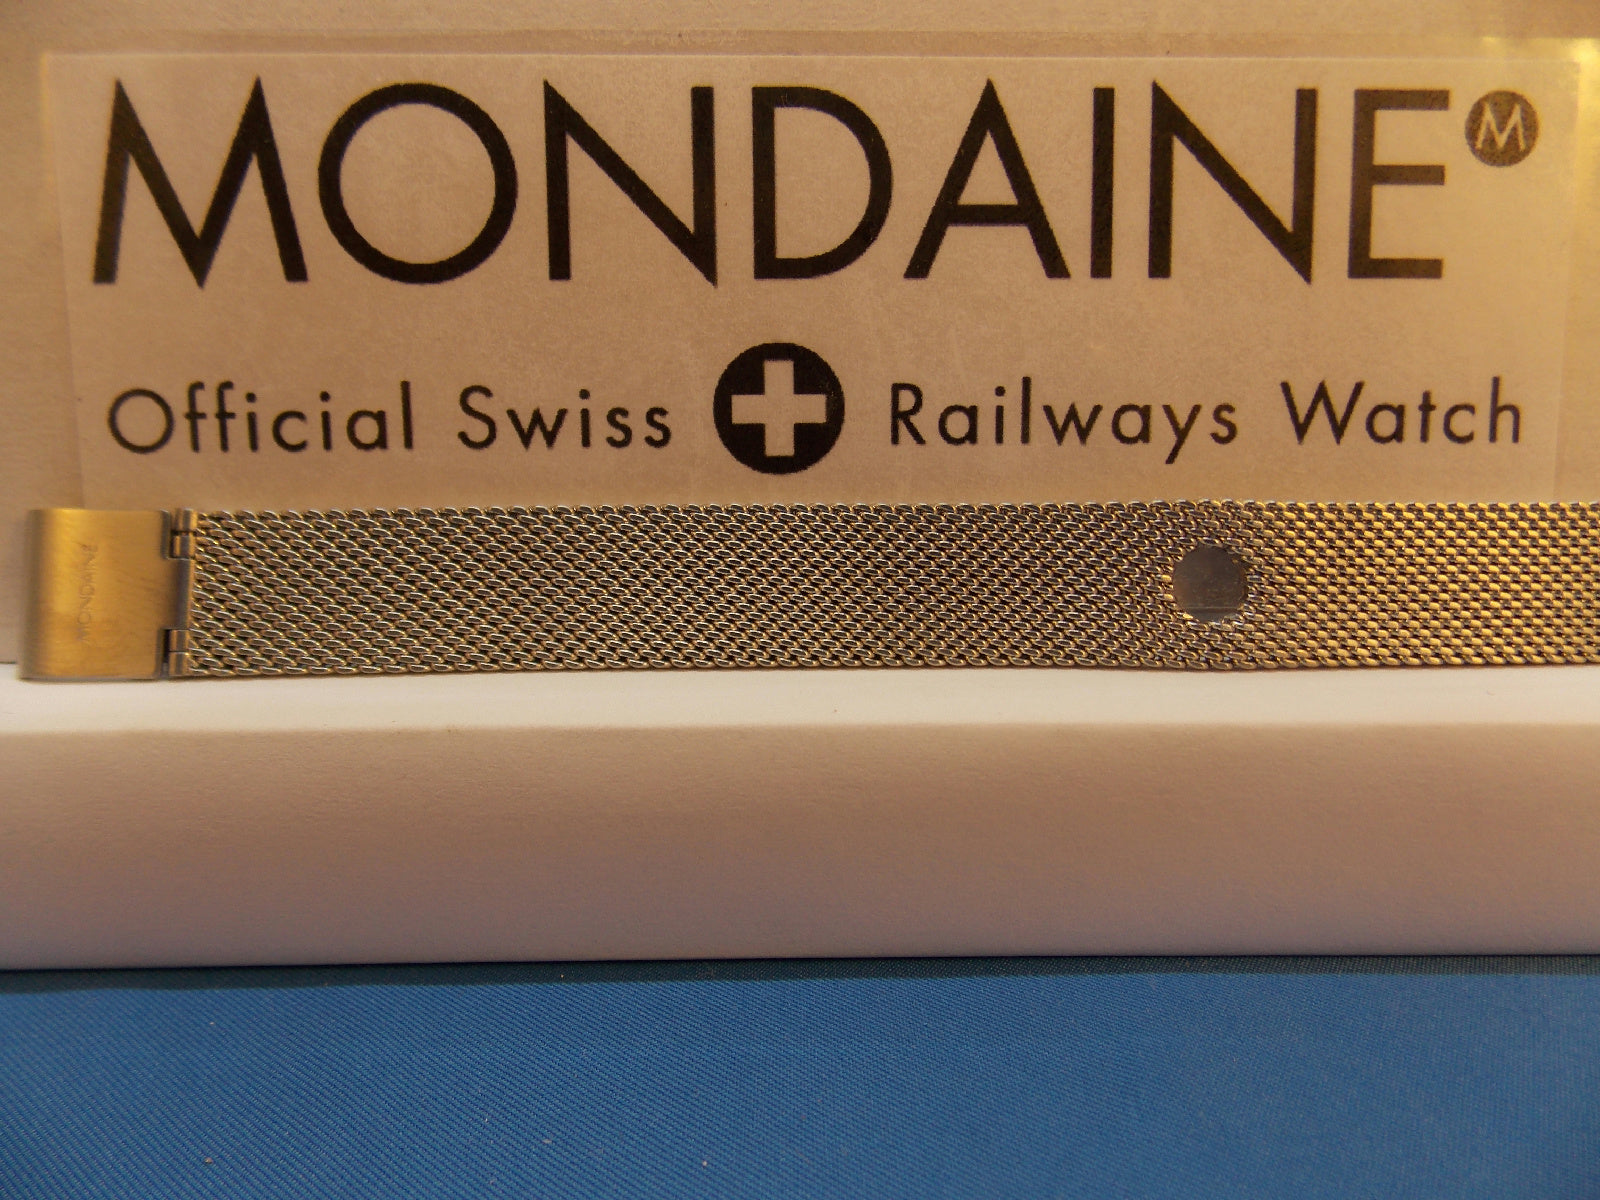 Mondaine Swiss Railways watchband 14mm Bracelet One Piece Steel Mesh Watchband